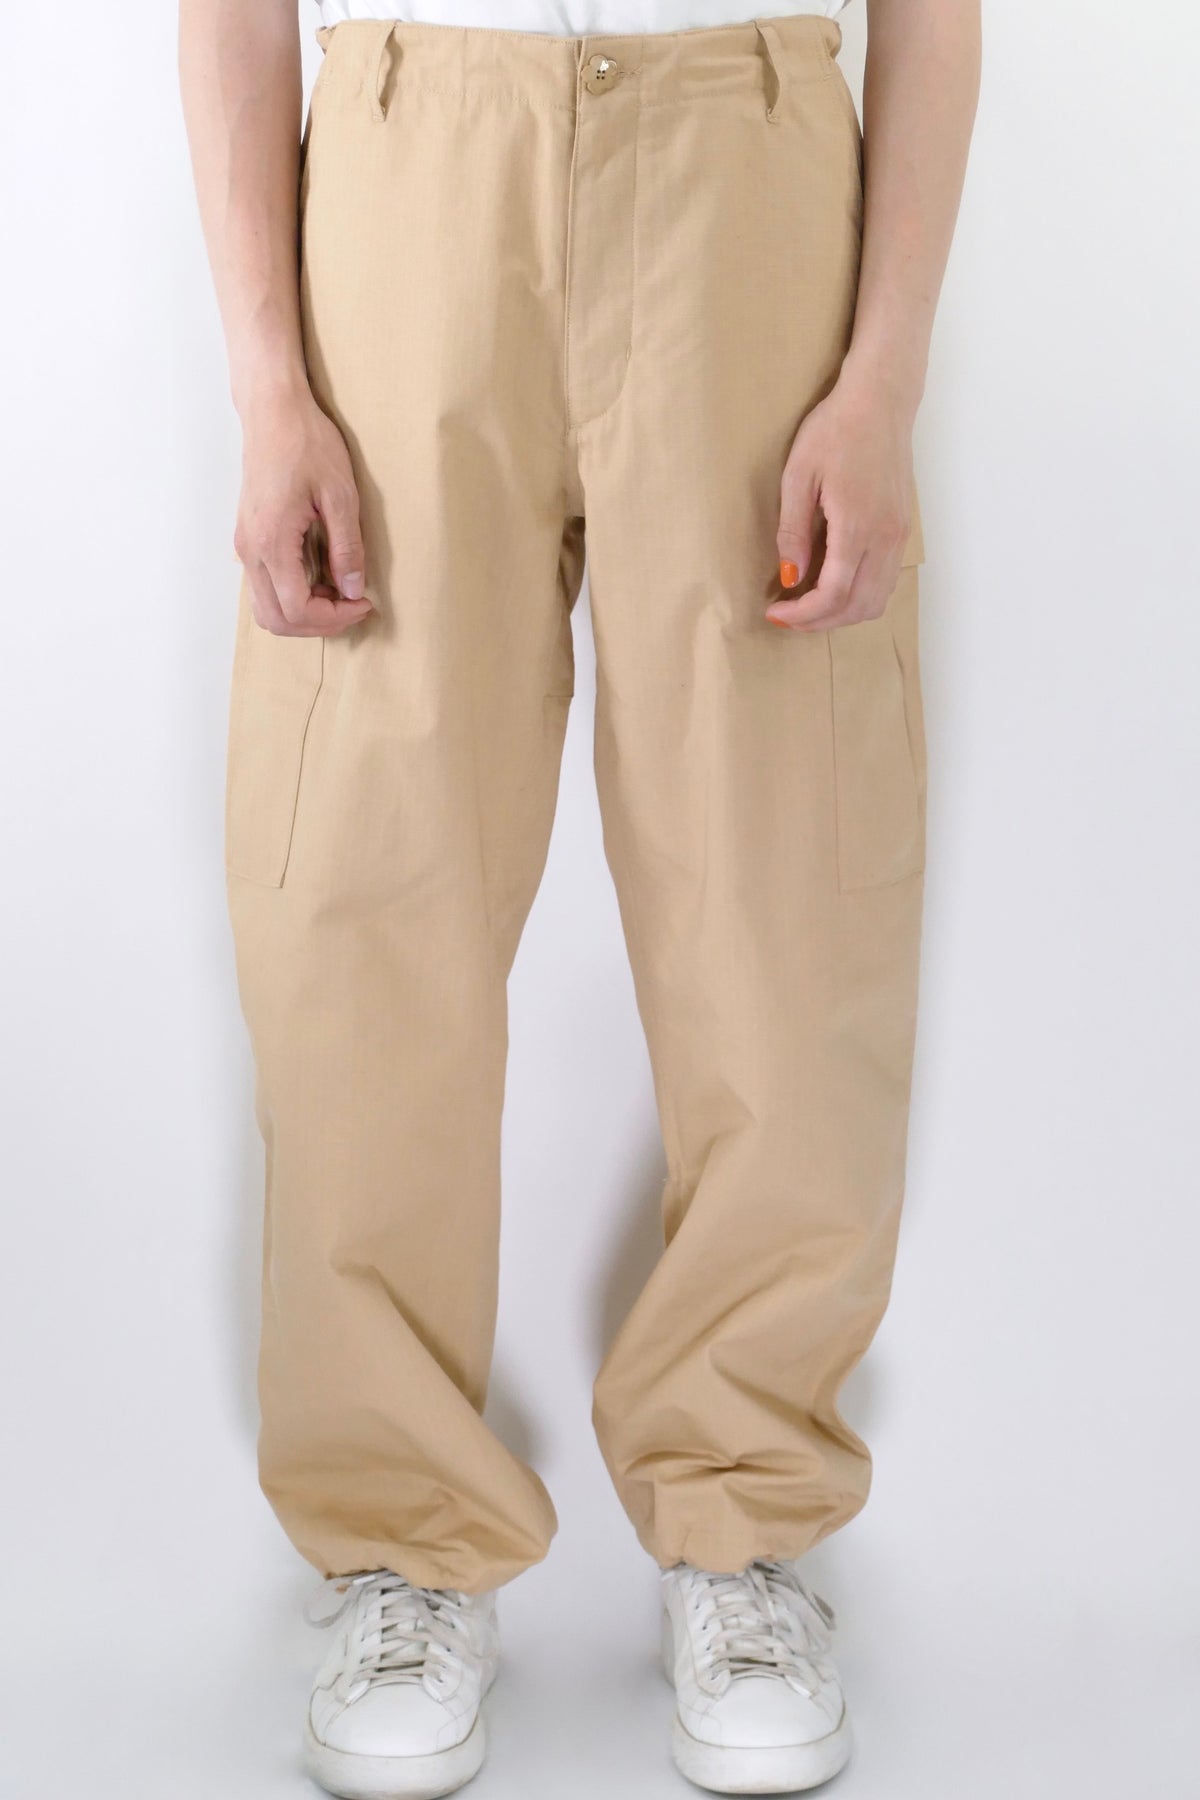 Kenzo Cargo Workwear Pants - Camel